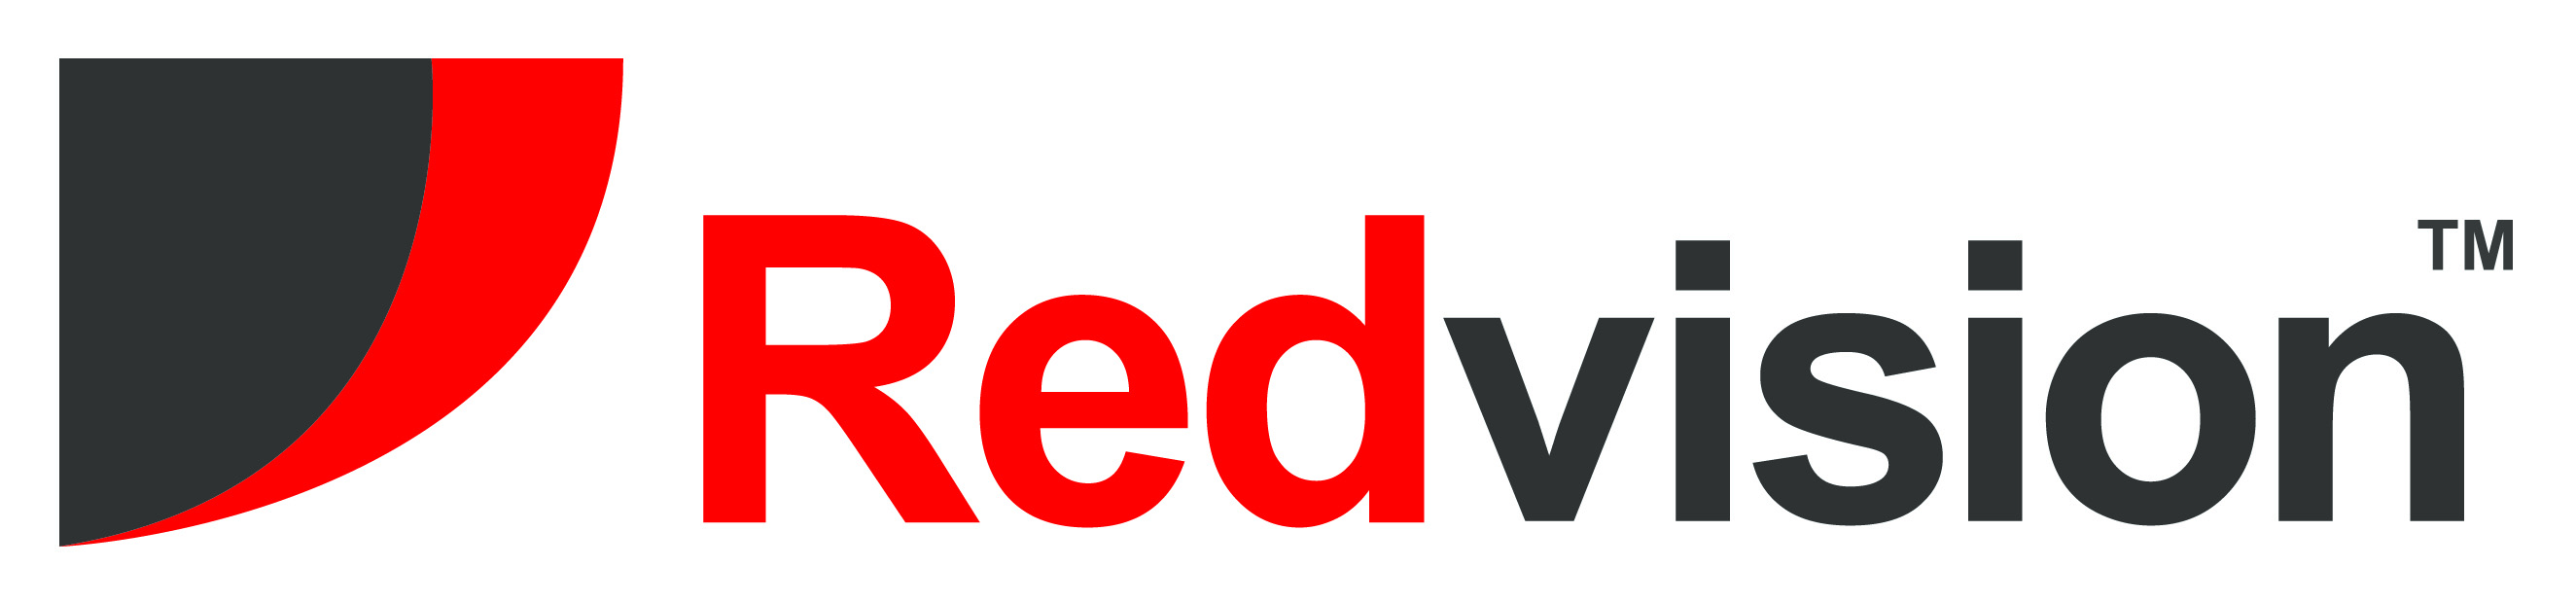 Redvision Logo photo - 1